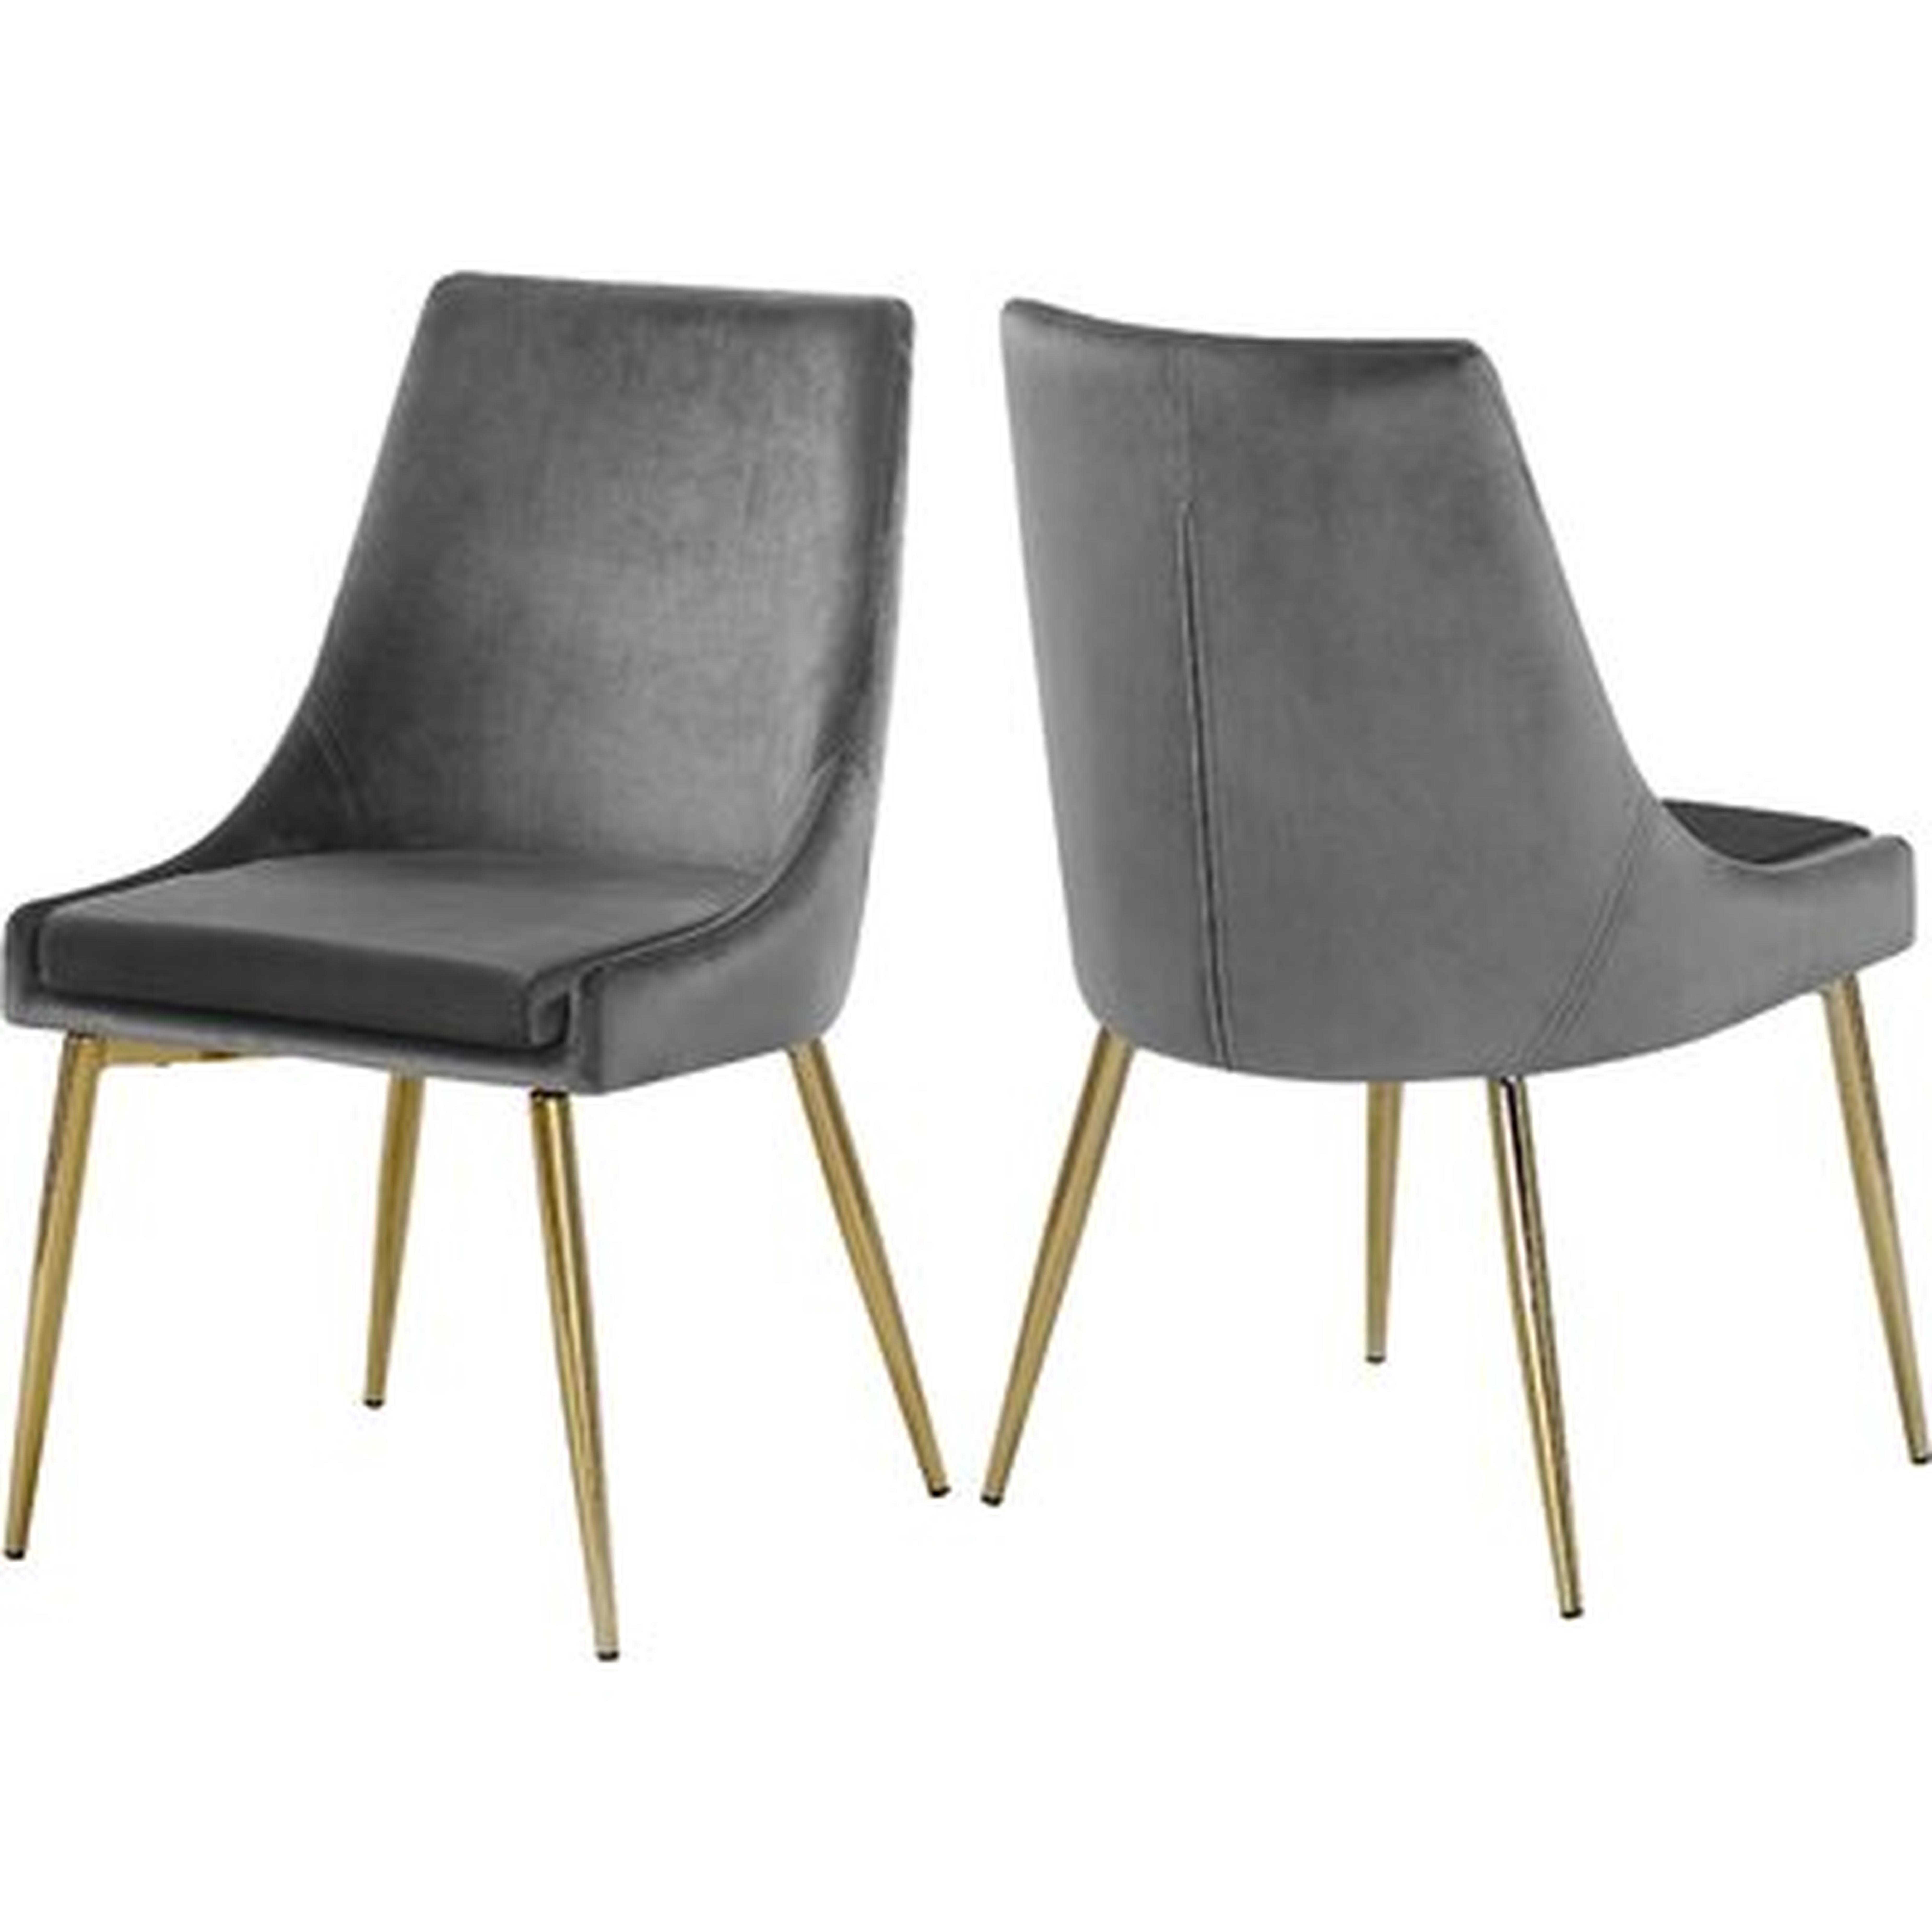 Ellenberger Upholstered Dining Chair  (Set of 2) - Wayfair